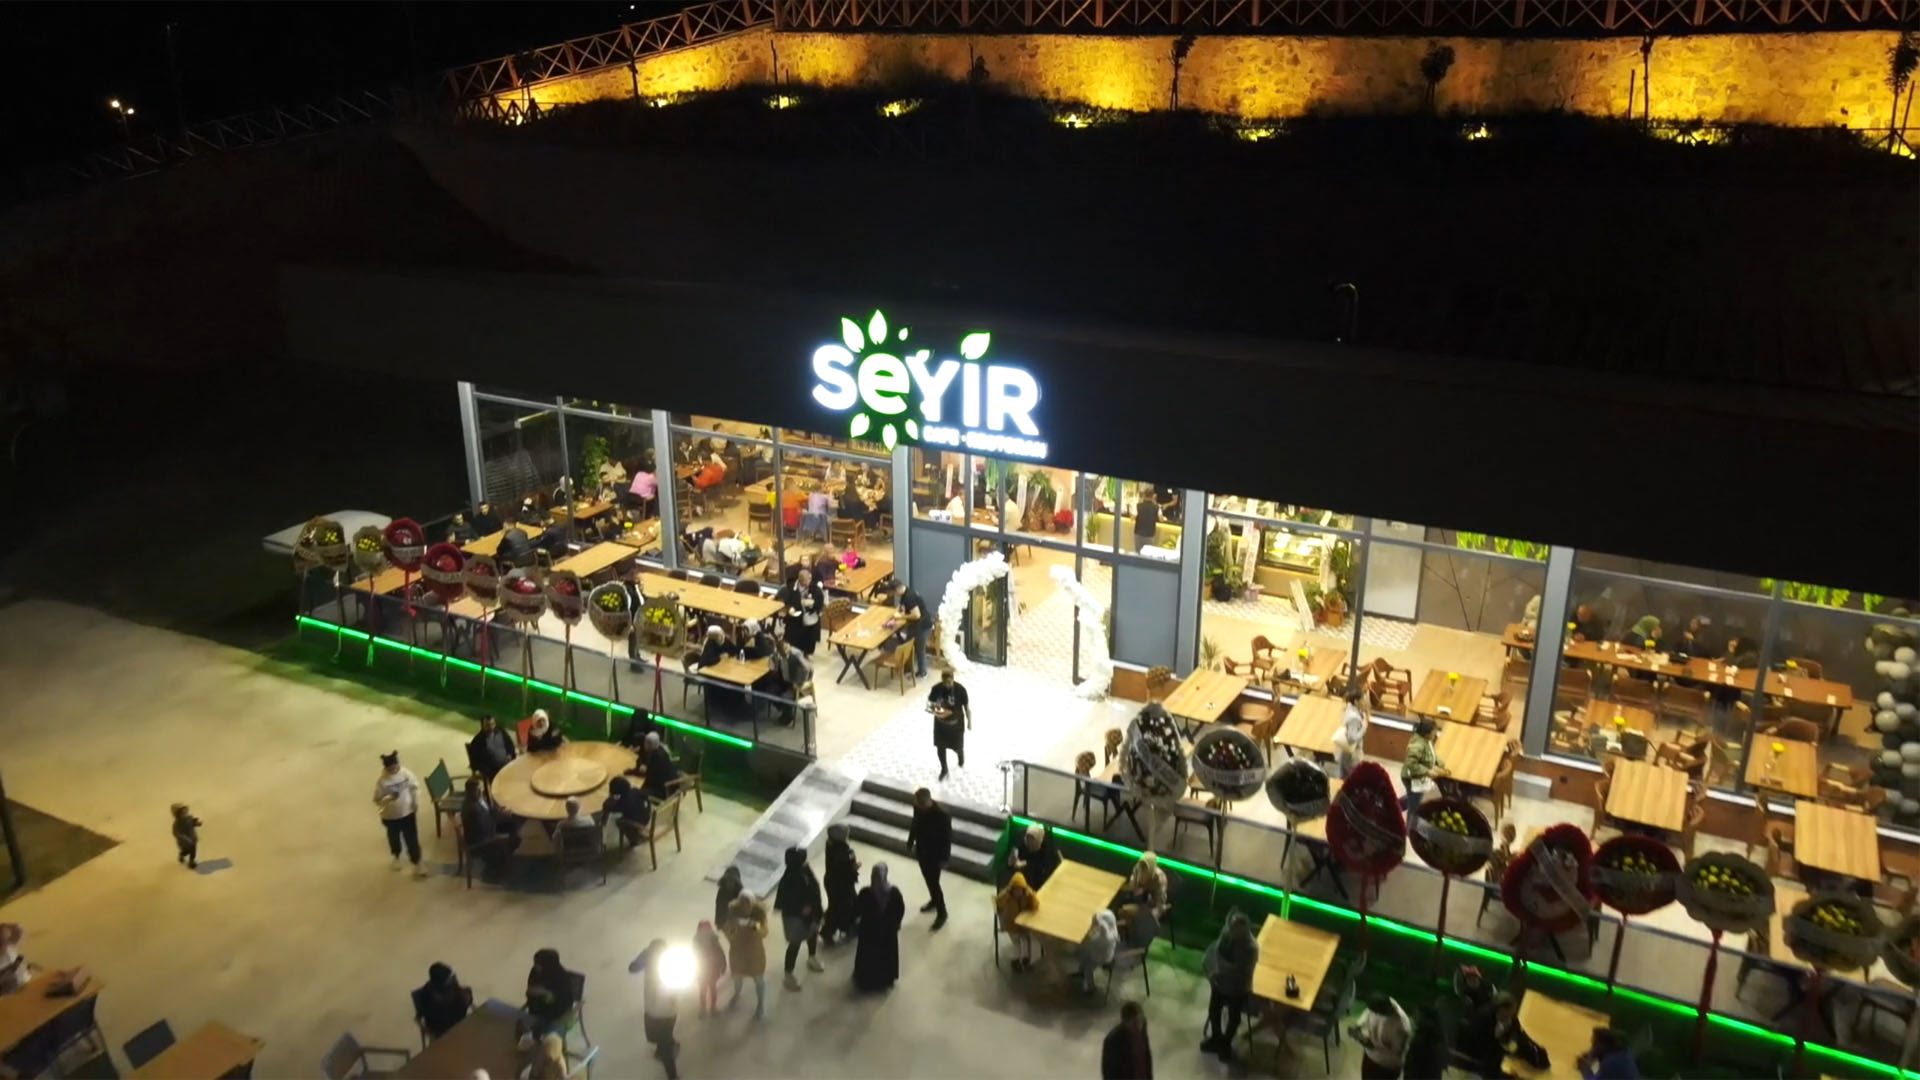 Seyir Cafe & Restaurant